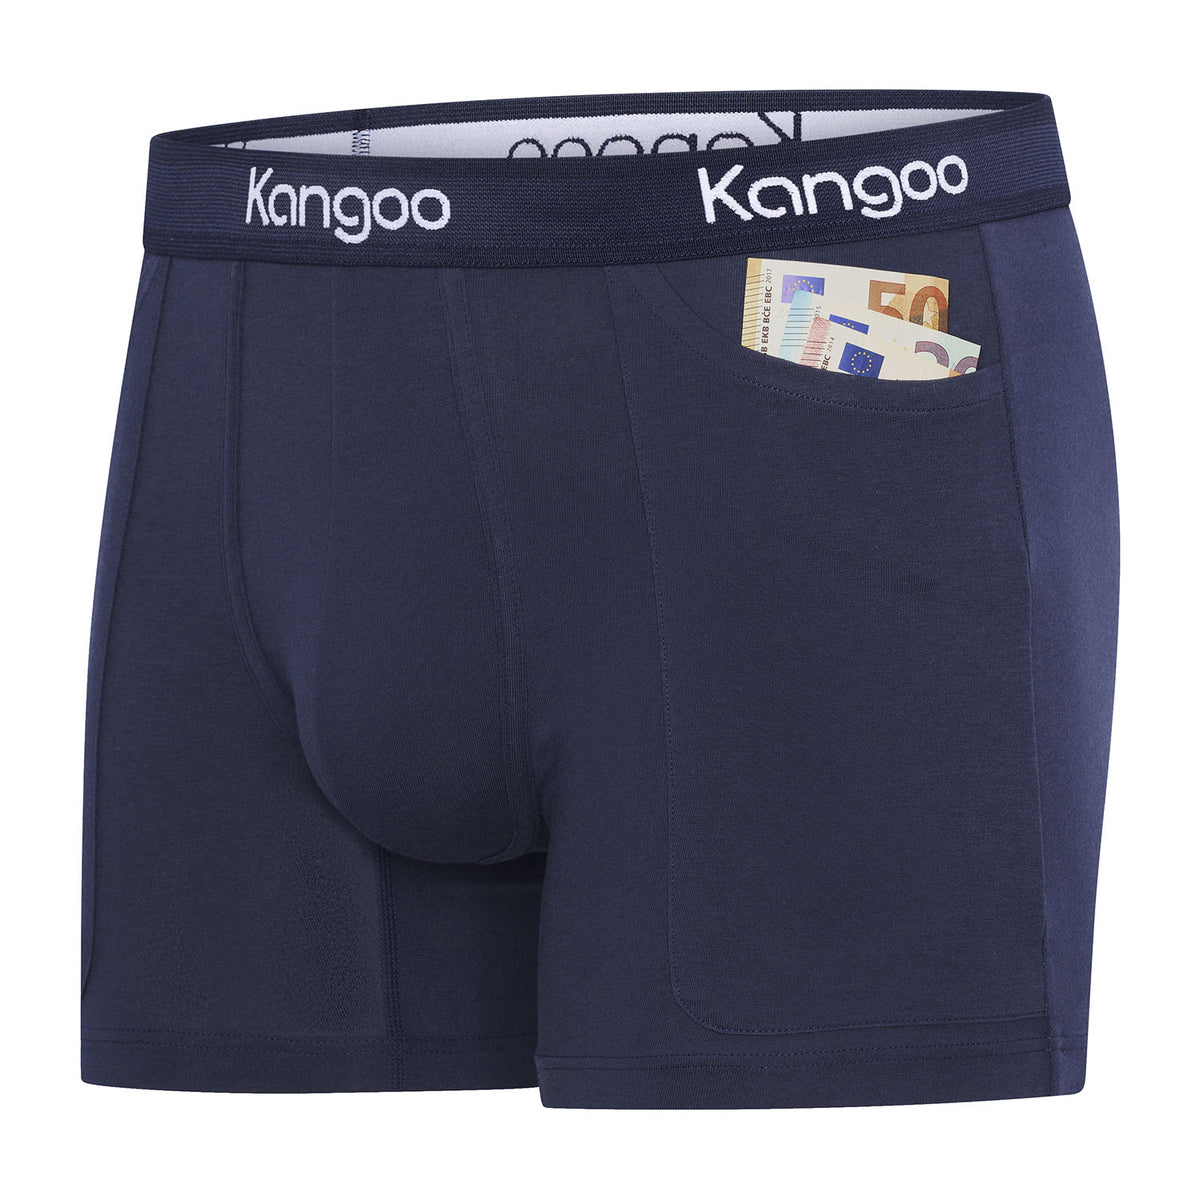 Kangoo | All Color | 3-pack